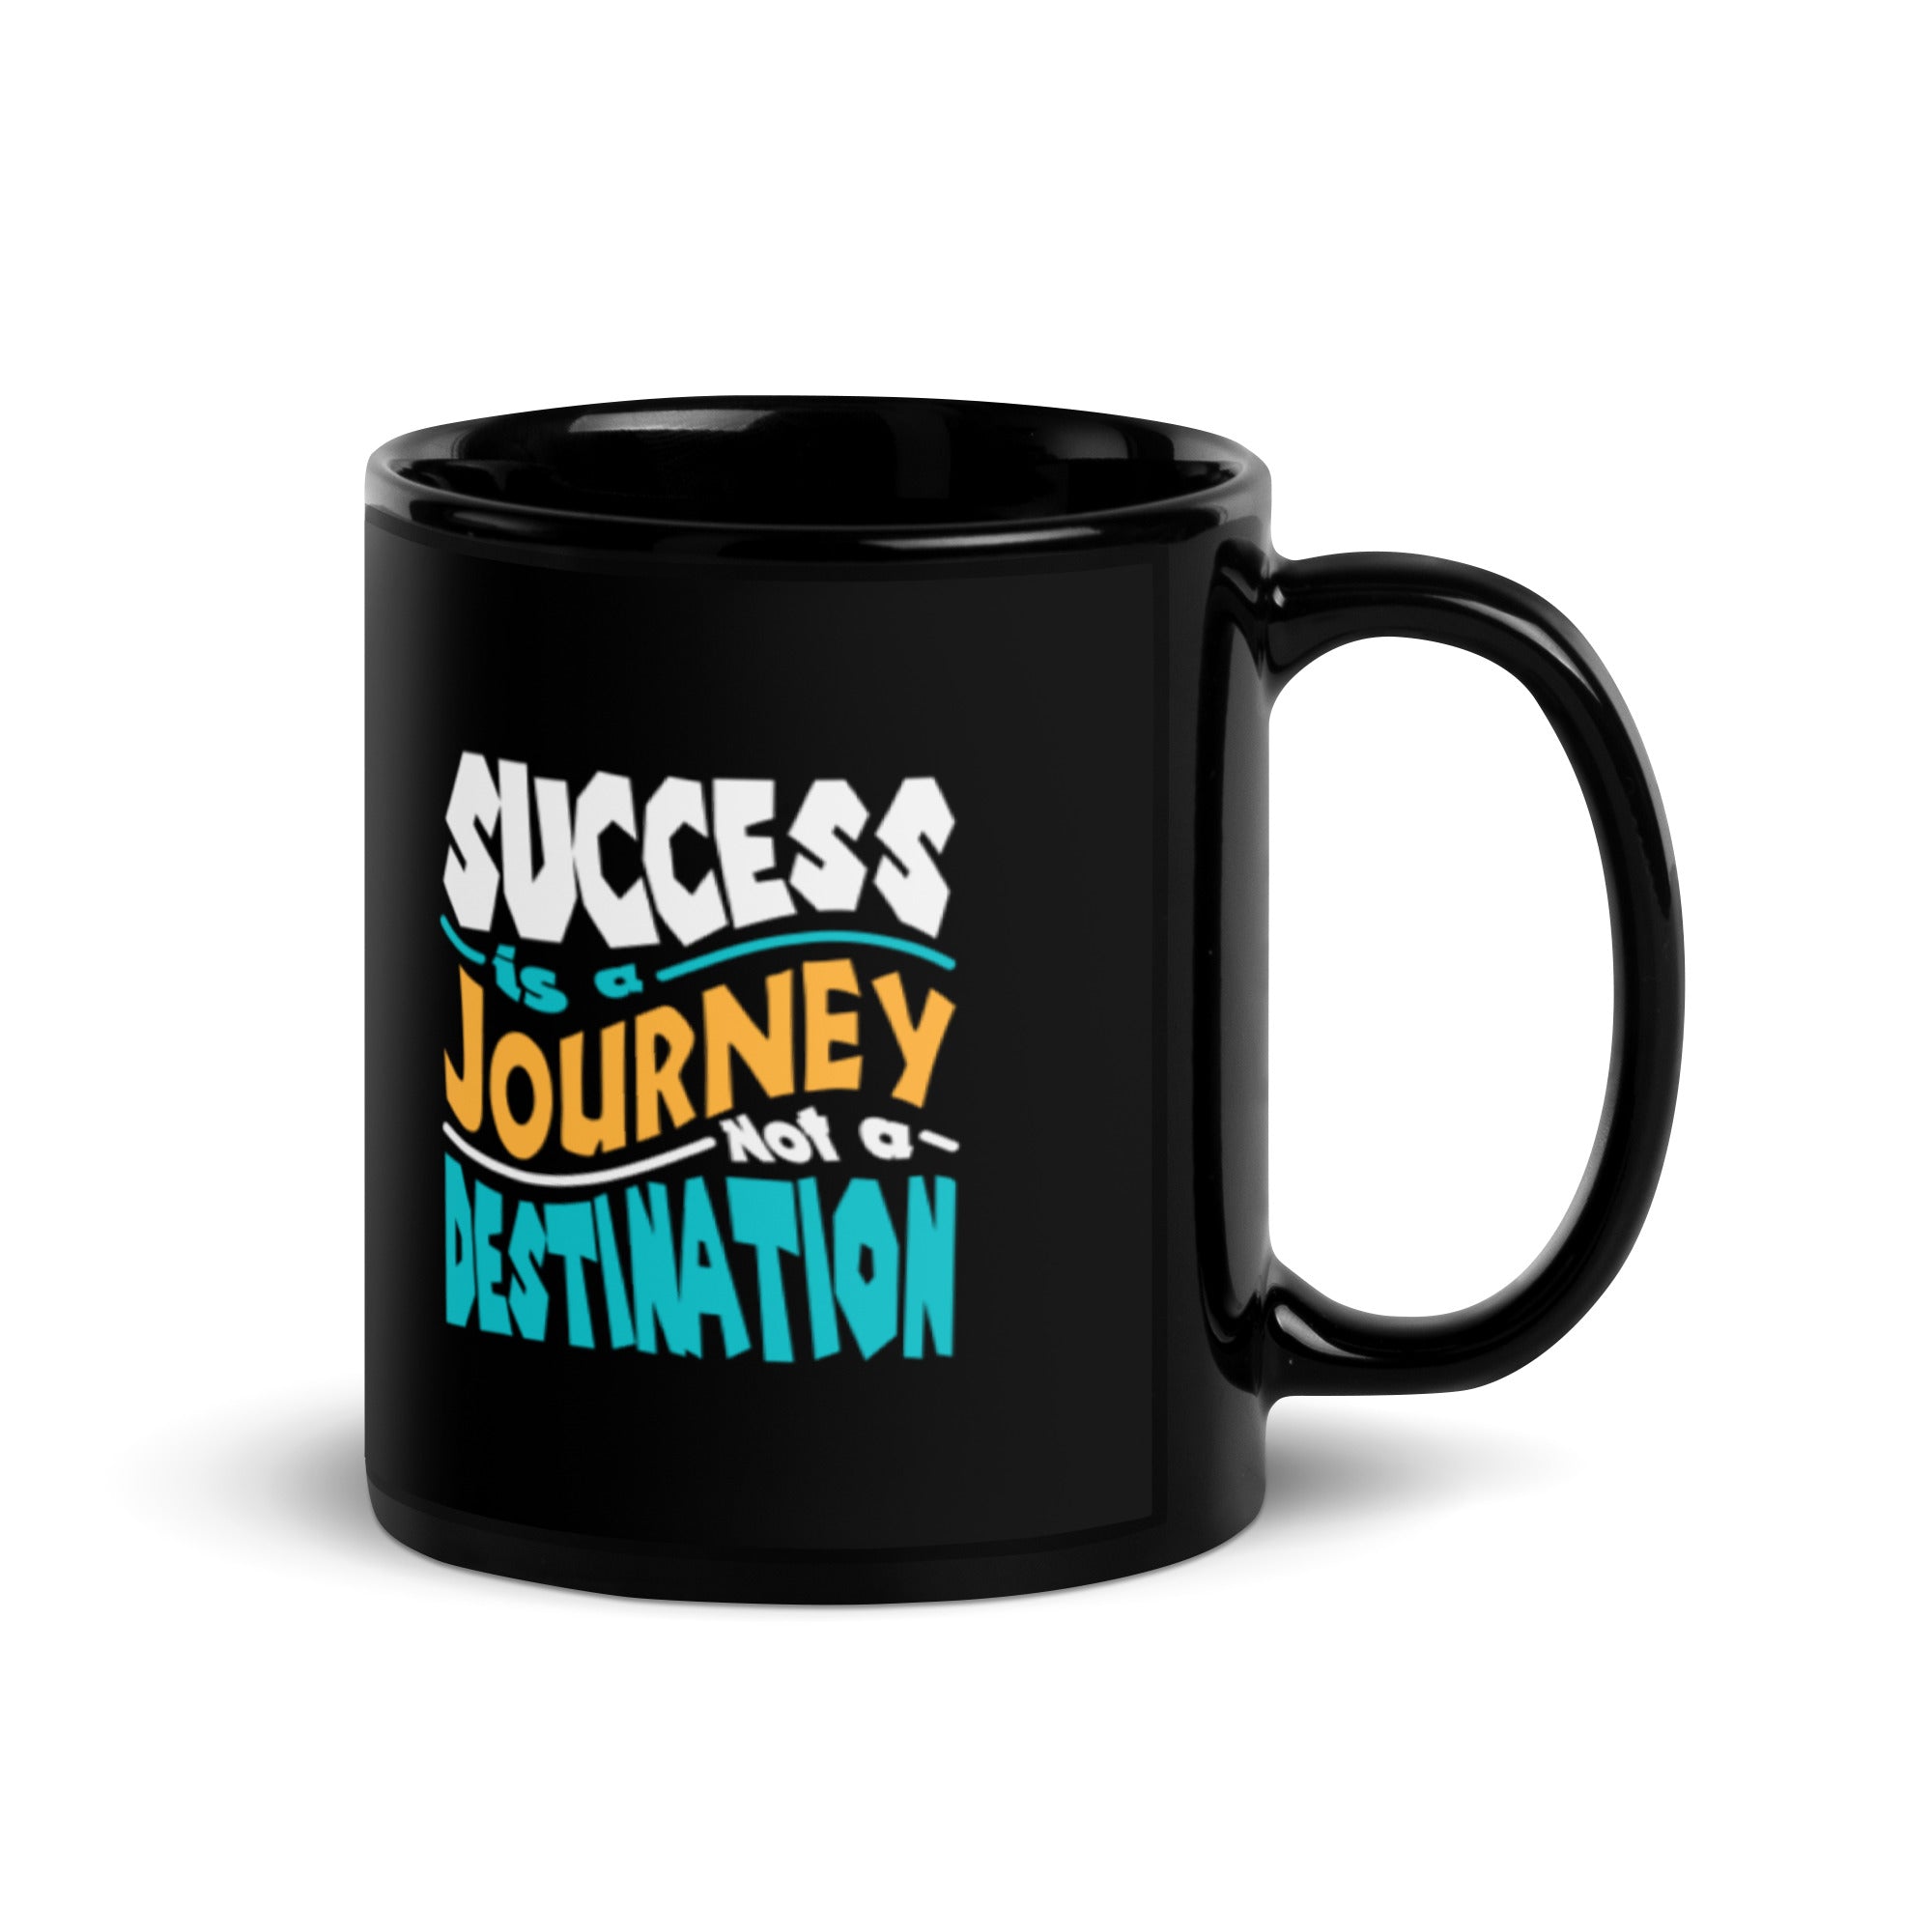 Success Is A Journey - Black Glossy Mug